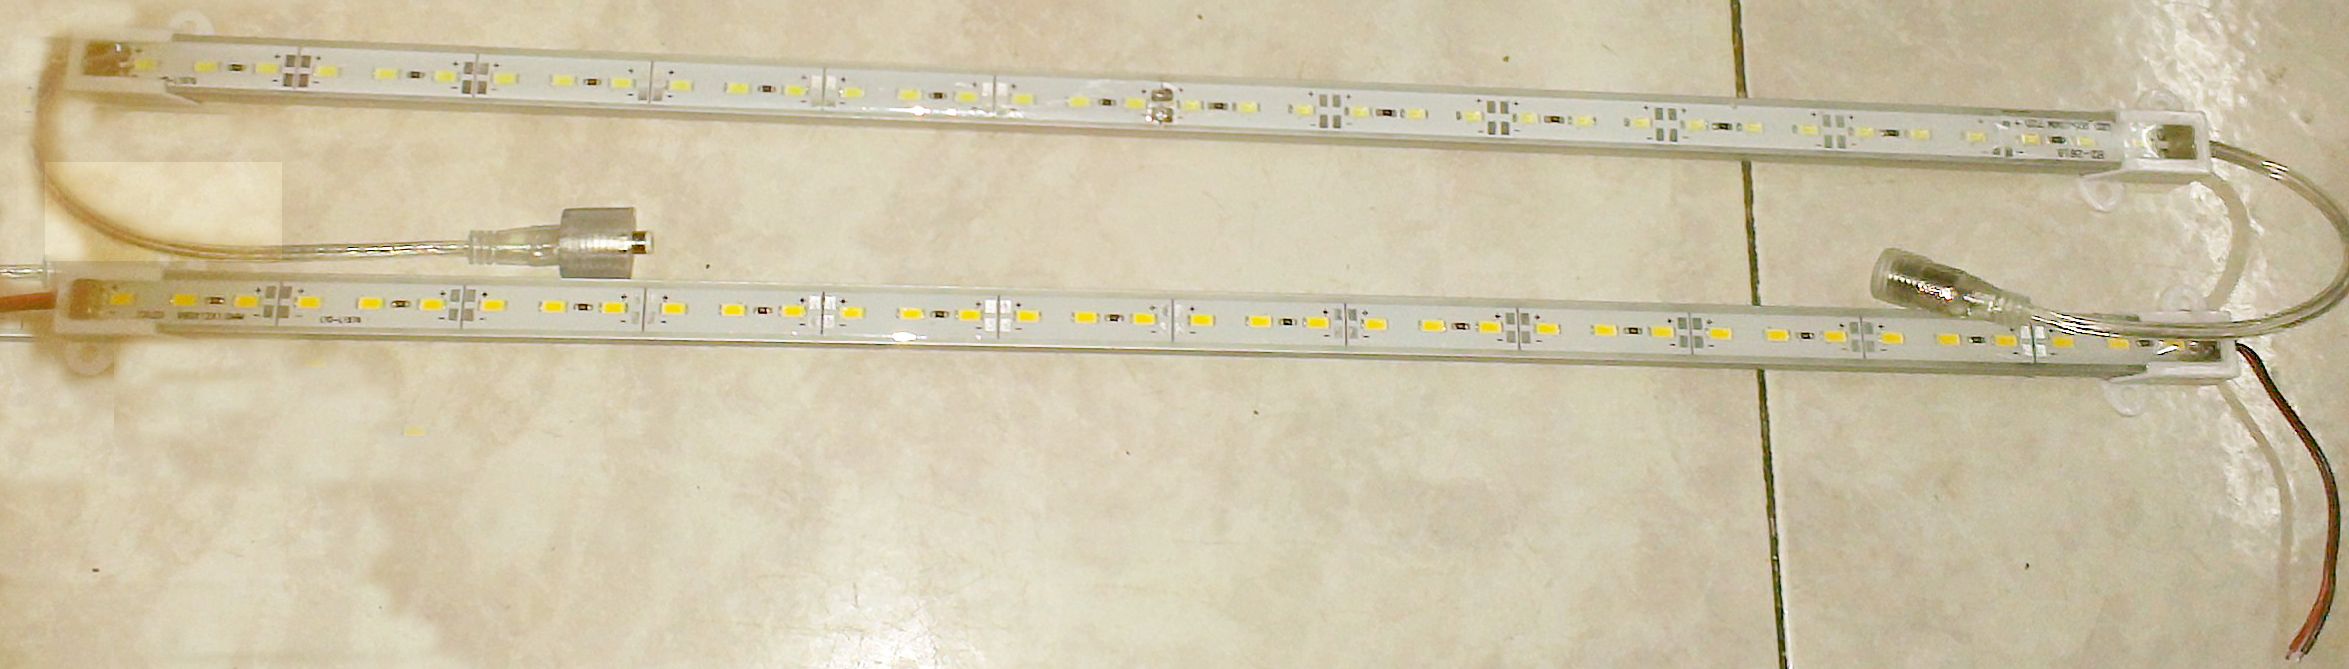 50X Hard LED Strip Waterproof IP68 5630 SMD Warm Rigid Bar 36 72 LEDs 1 Meter 0.5M Light With